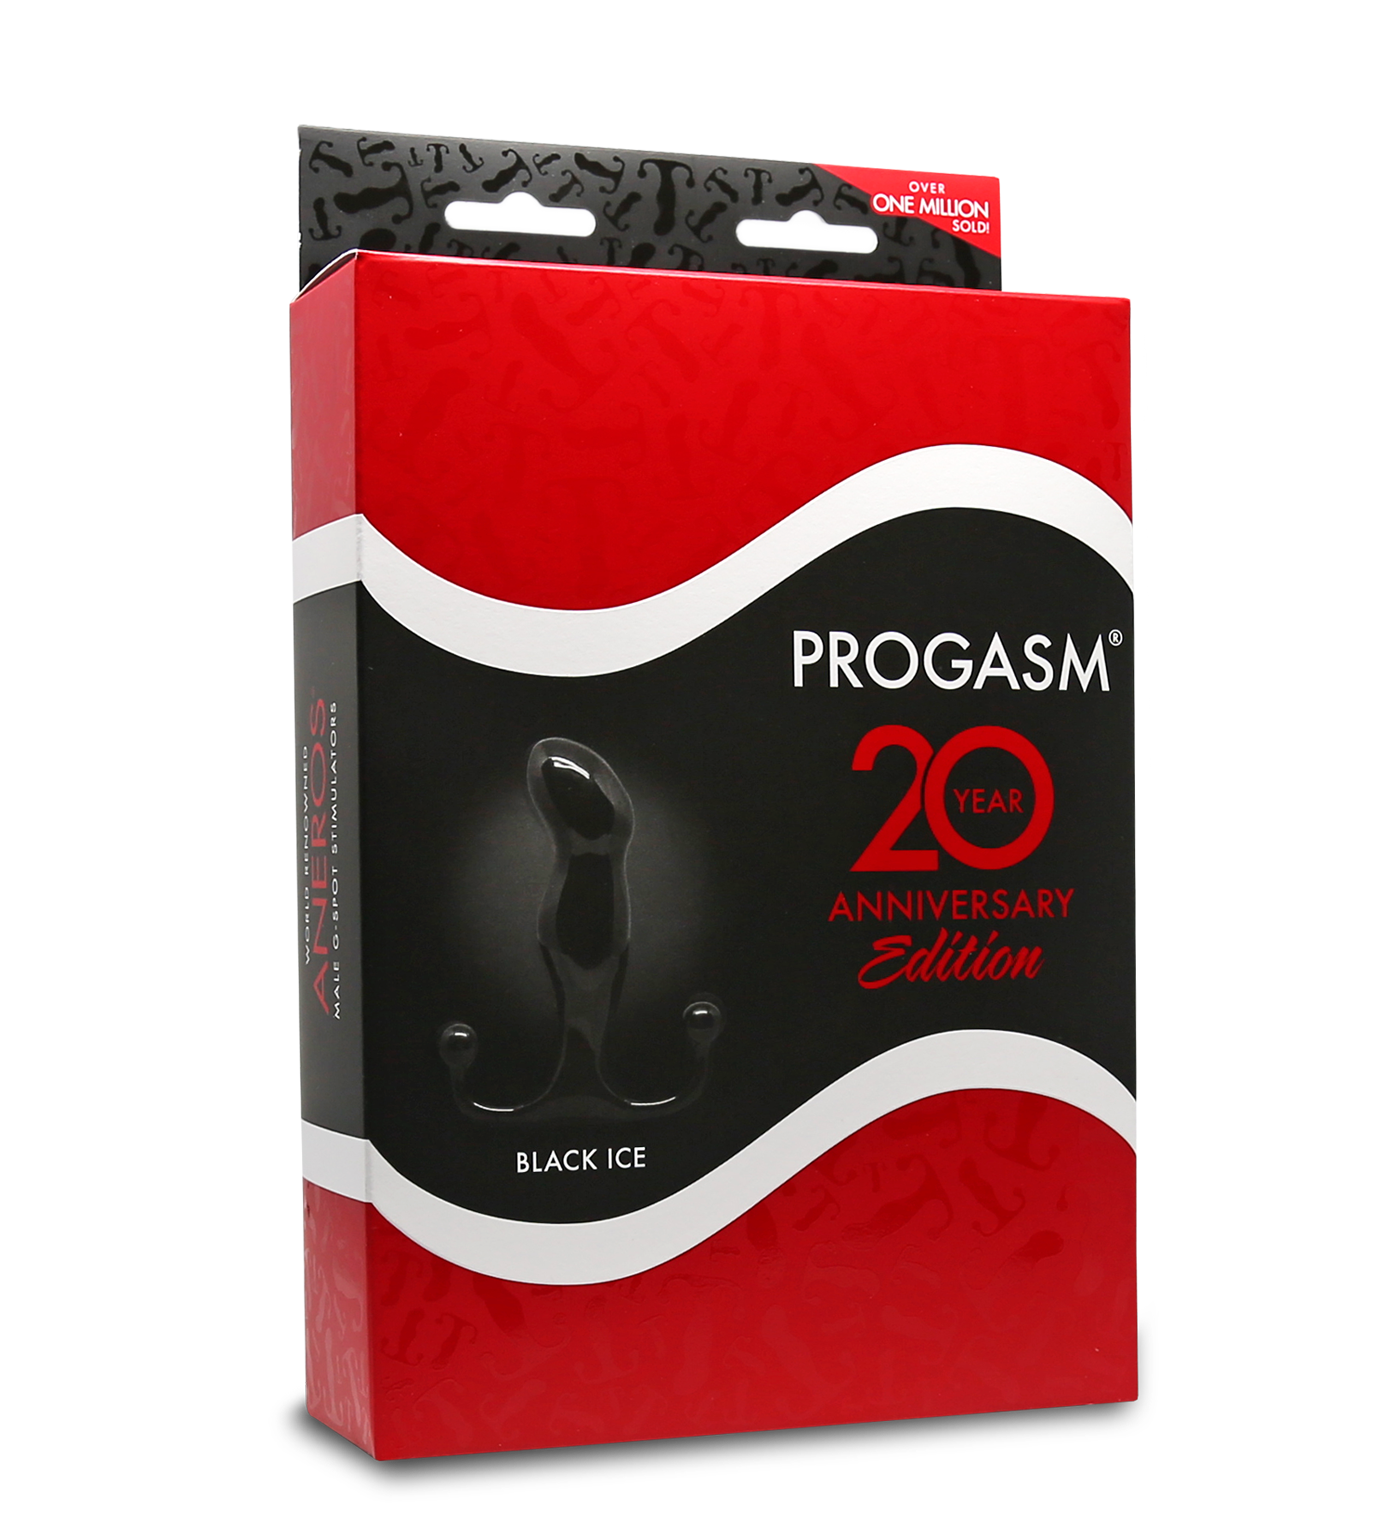 Aneros Progasm Black Ice Packaging